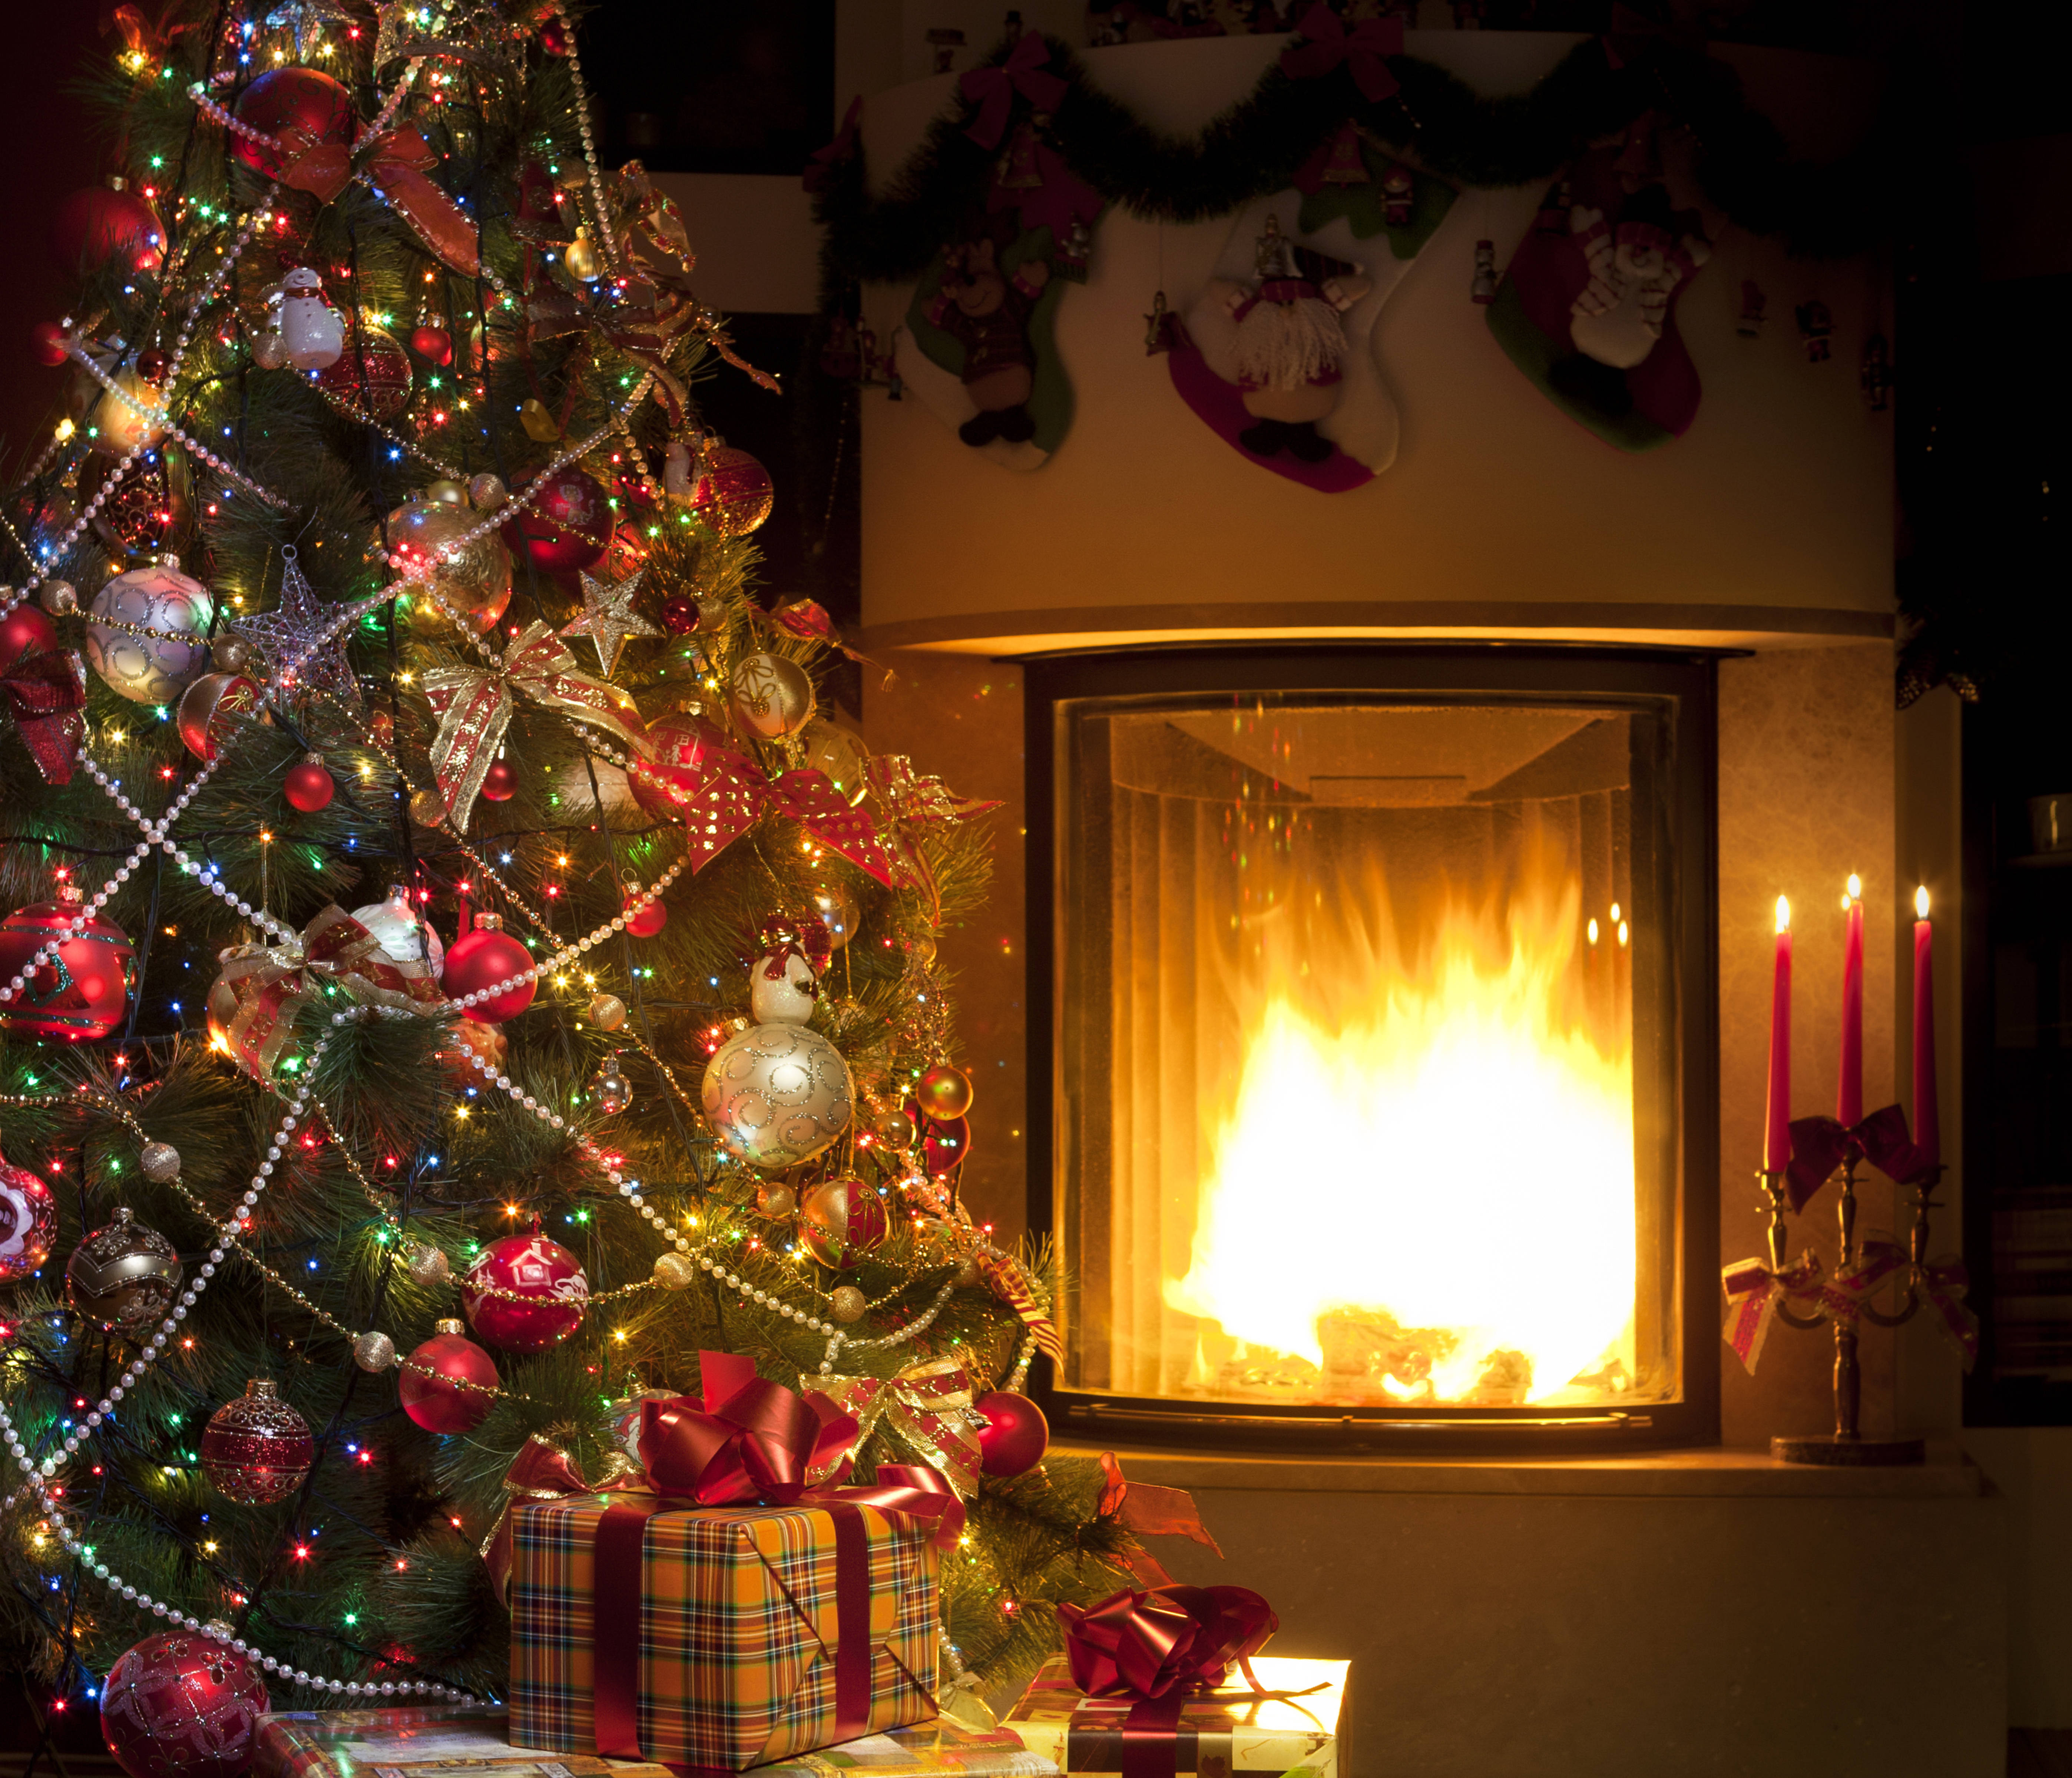 Enchanting Fireplace Christmas Setup on a Cool Winter Night Wallpaper